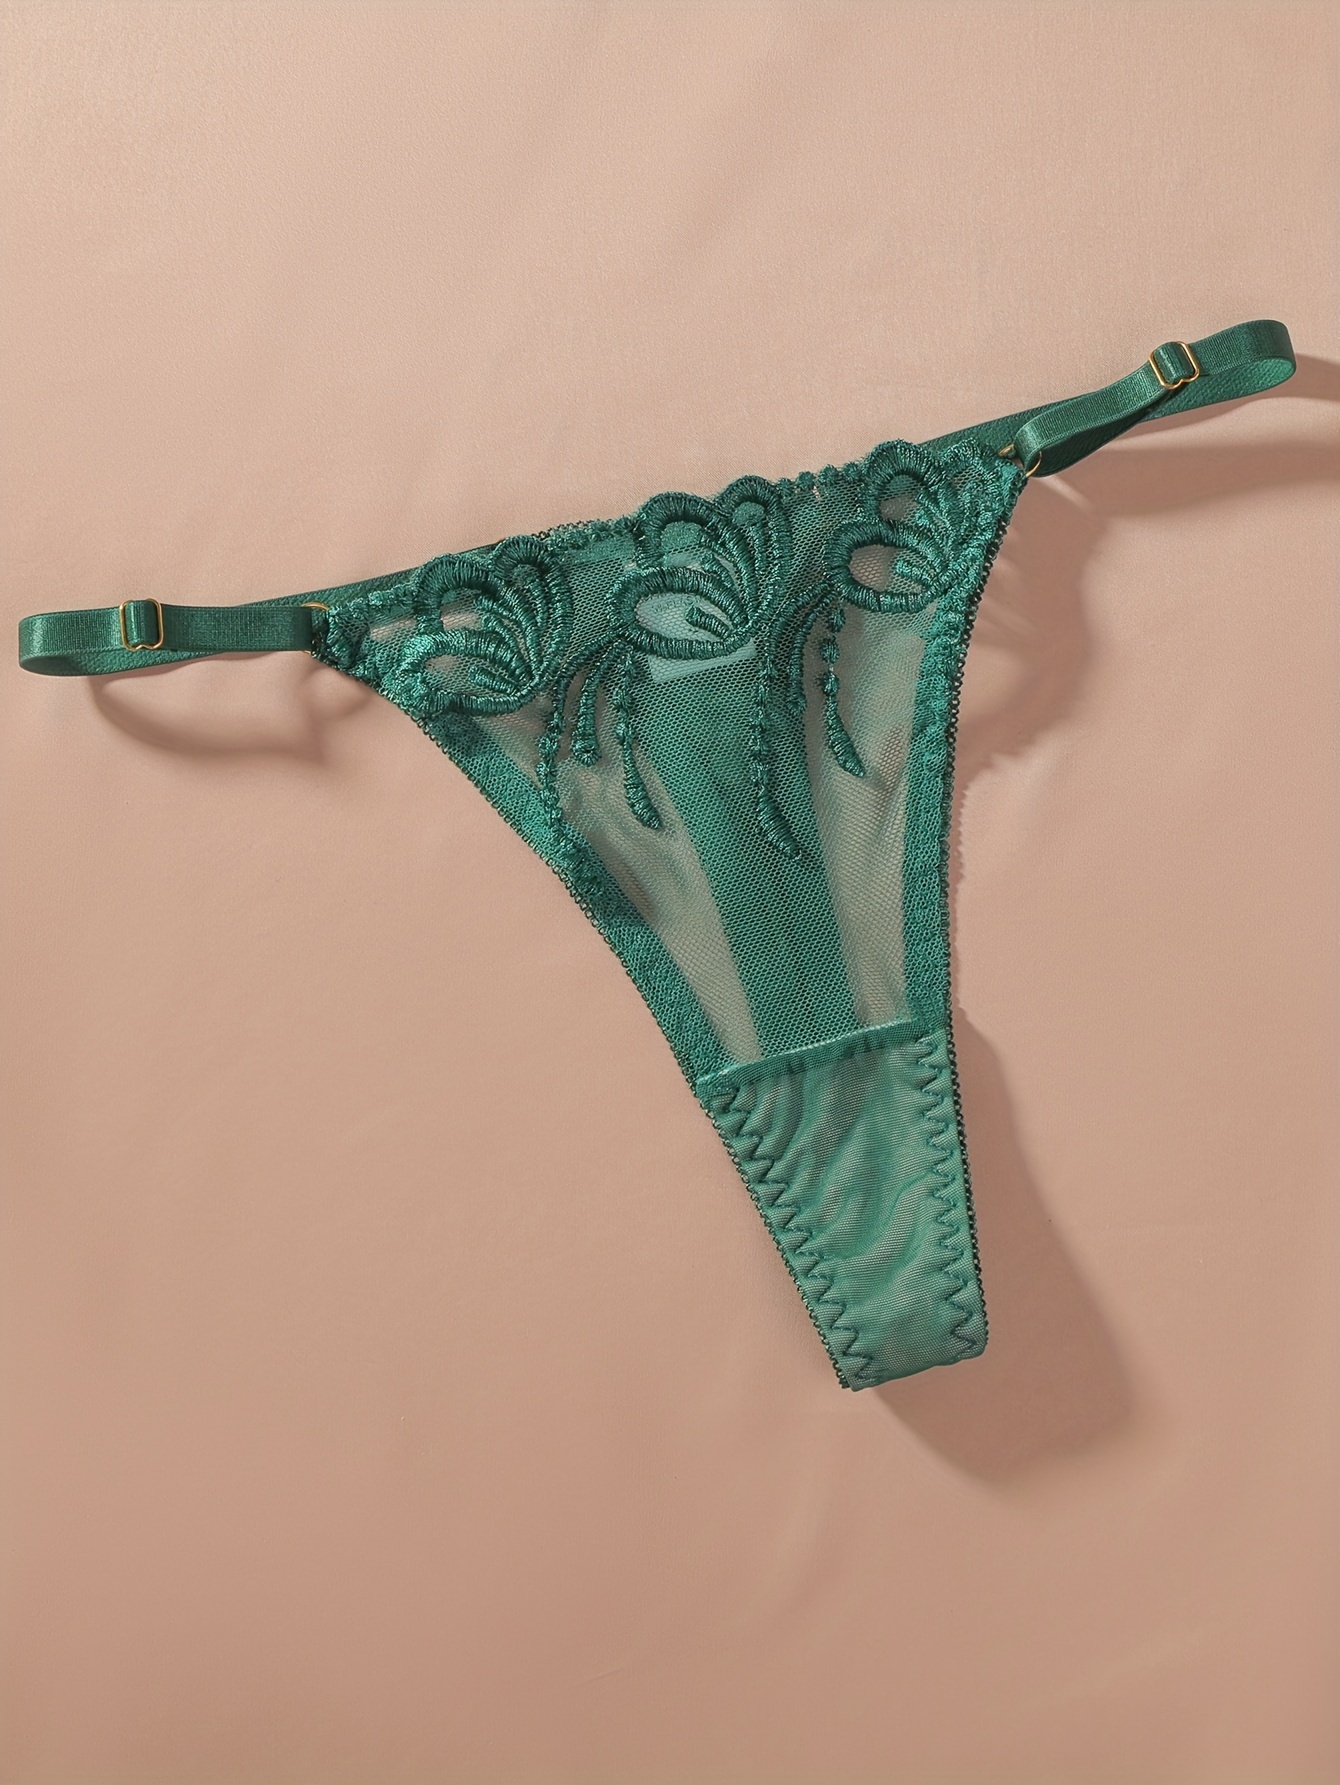 Panties: Mesh, Lace & Satin Underwear - nude